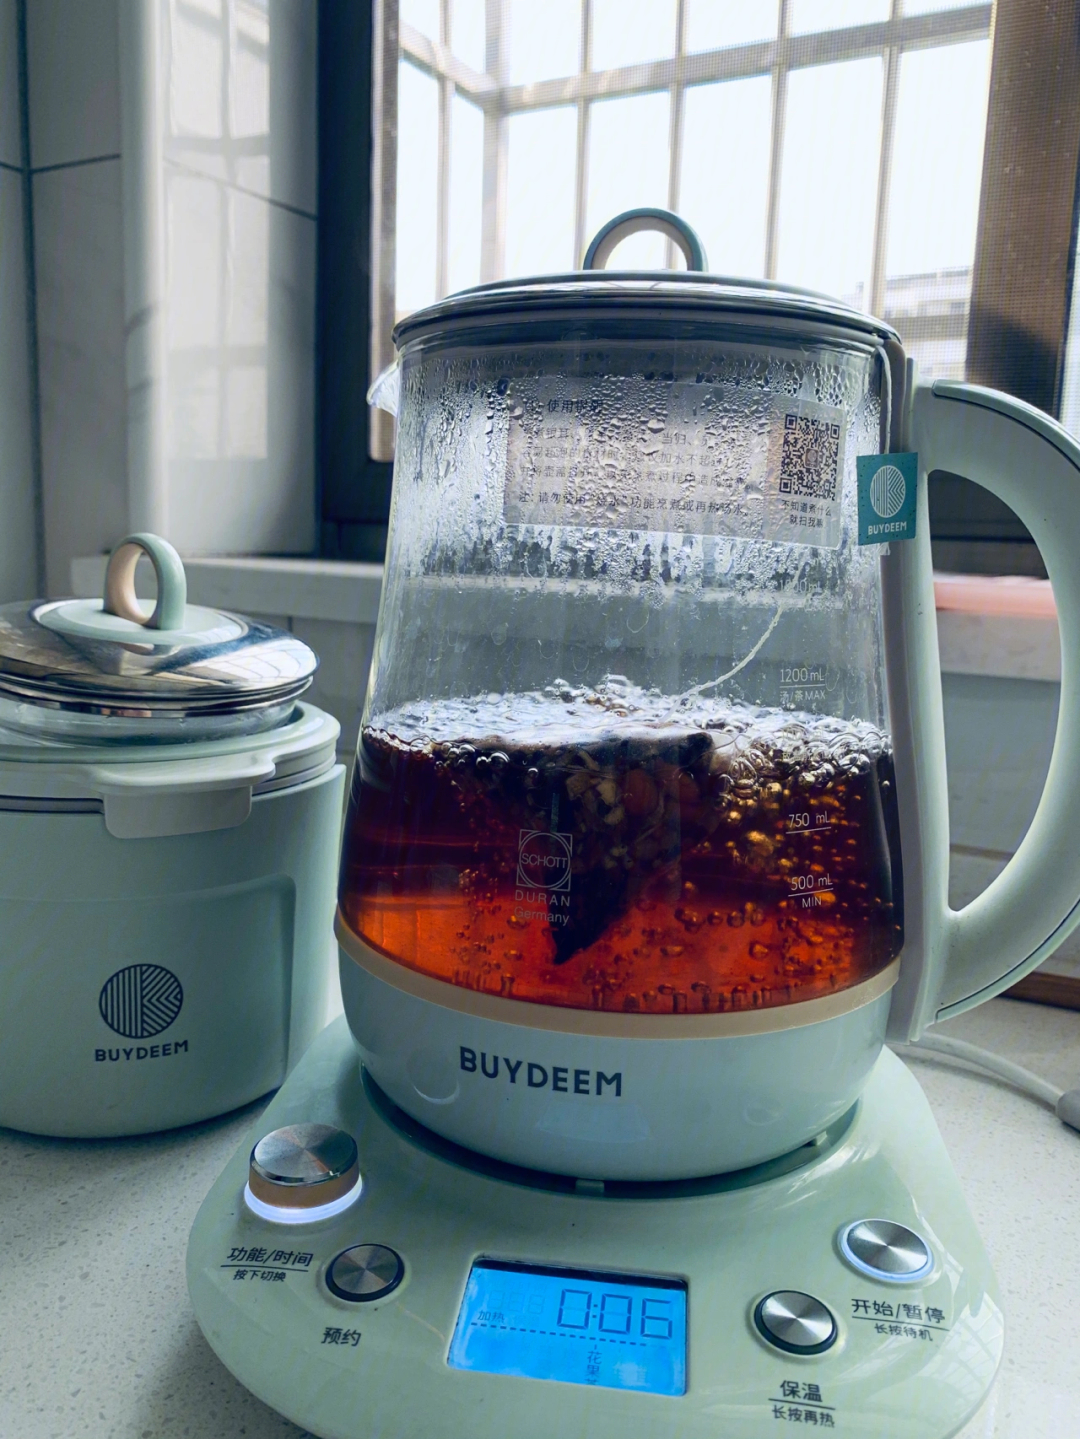 julia 北鼎养生壶,煮人参五宝茶,花茶模式煮上10分钟,甜丝丝的半壶水